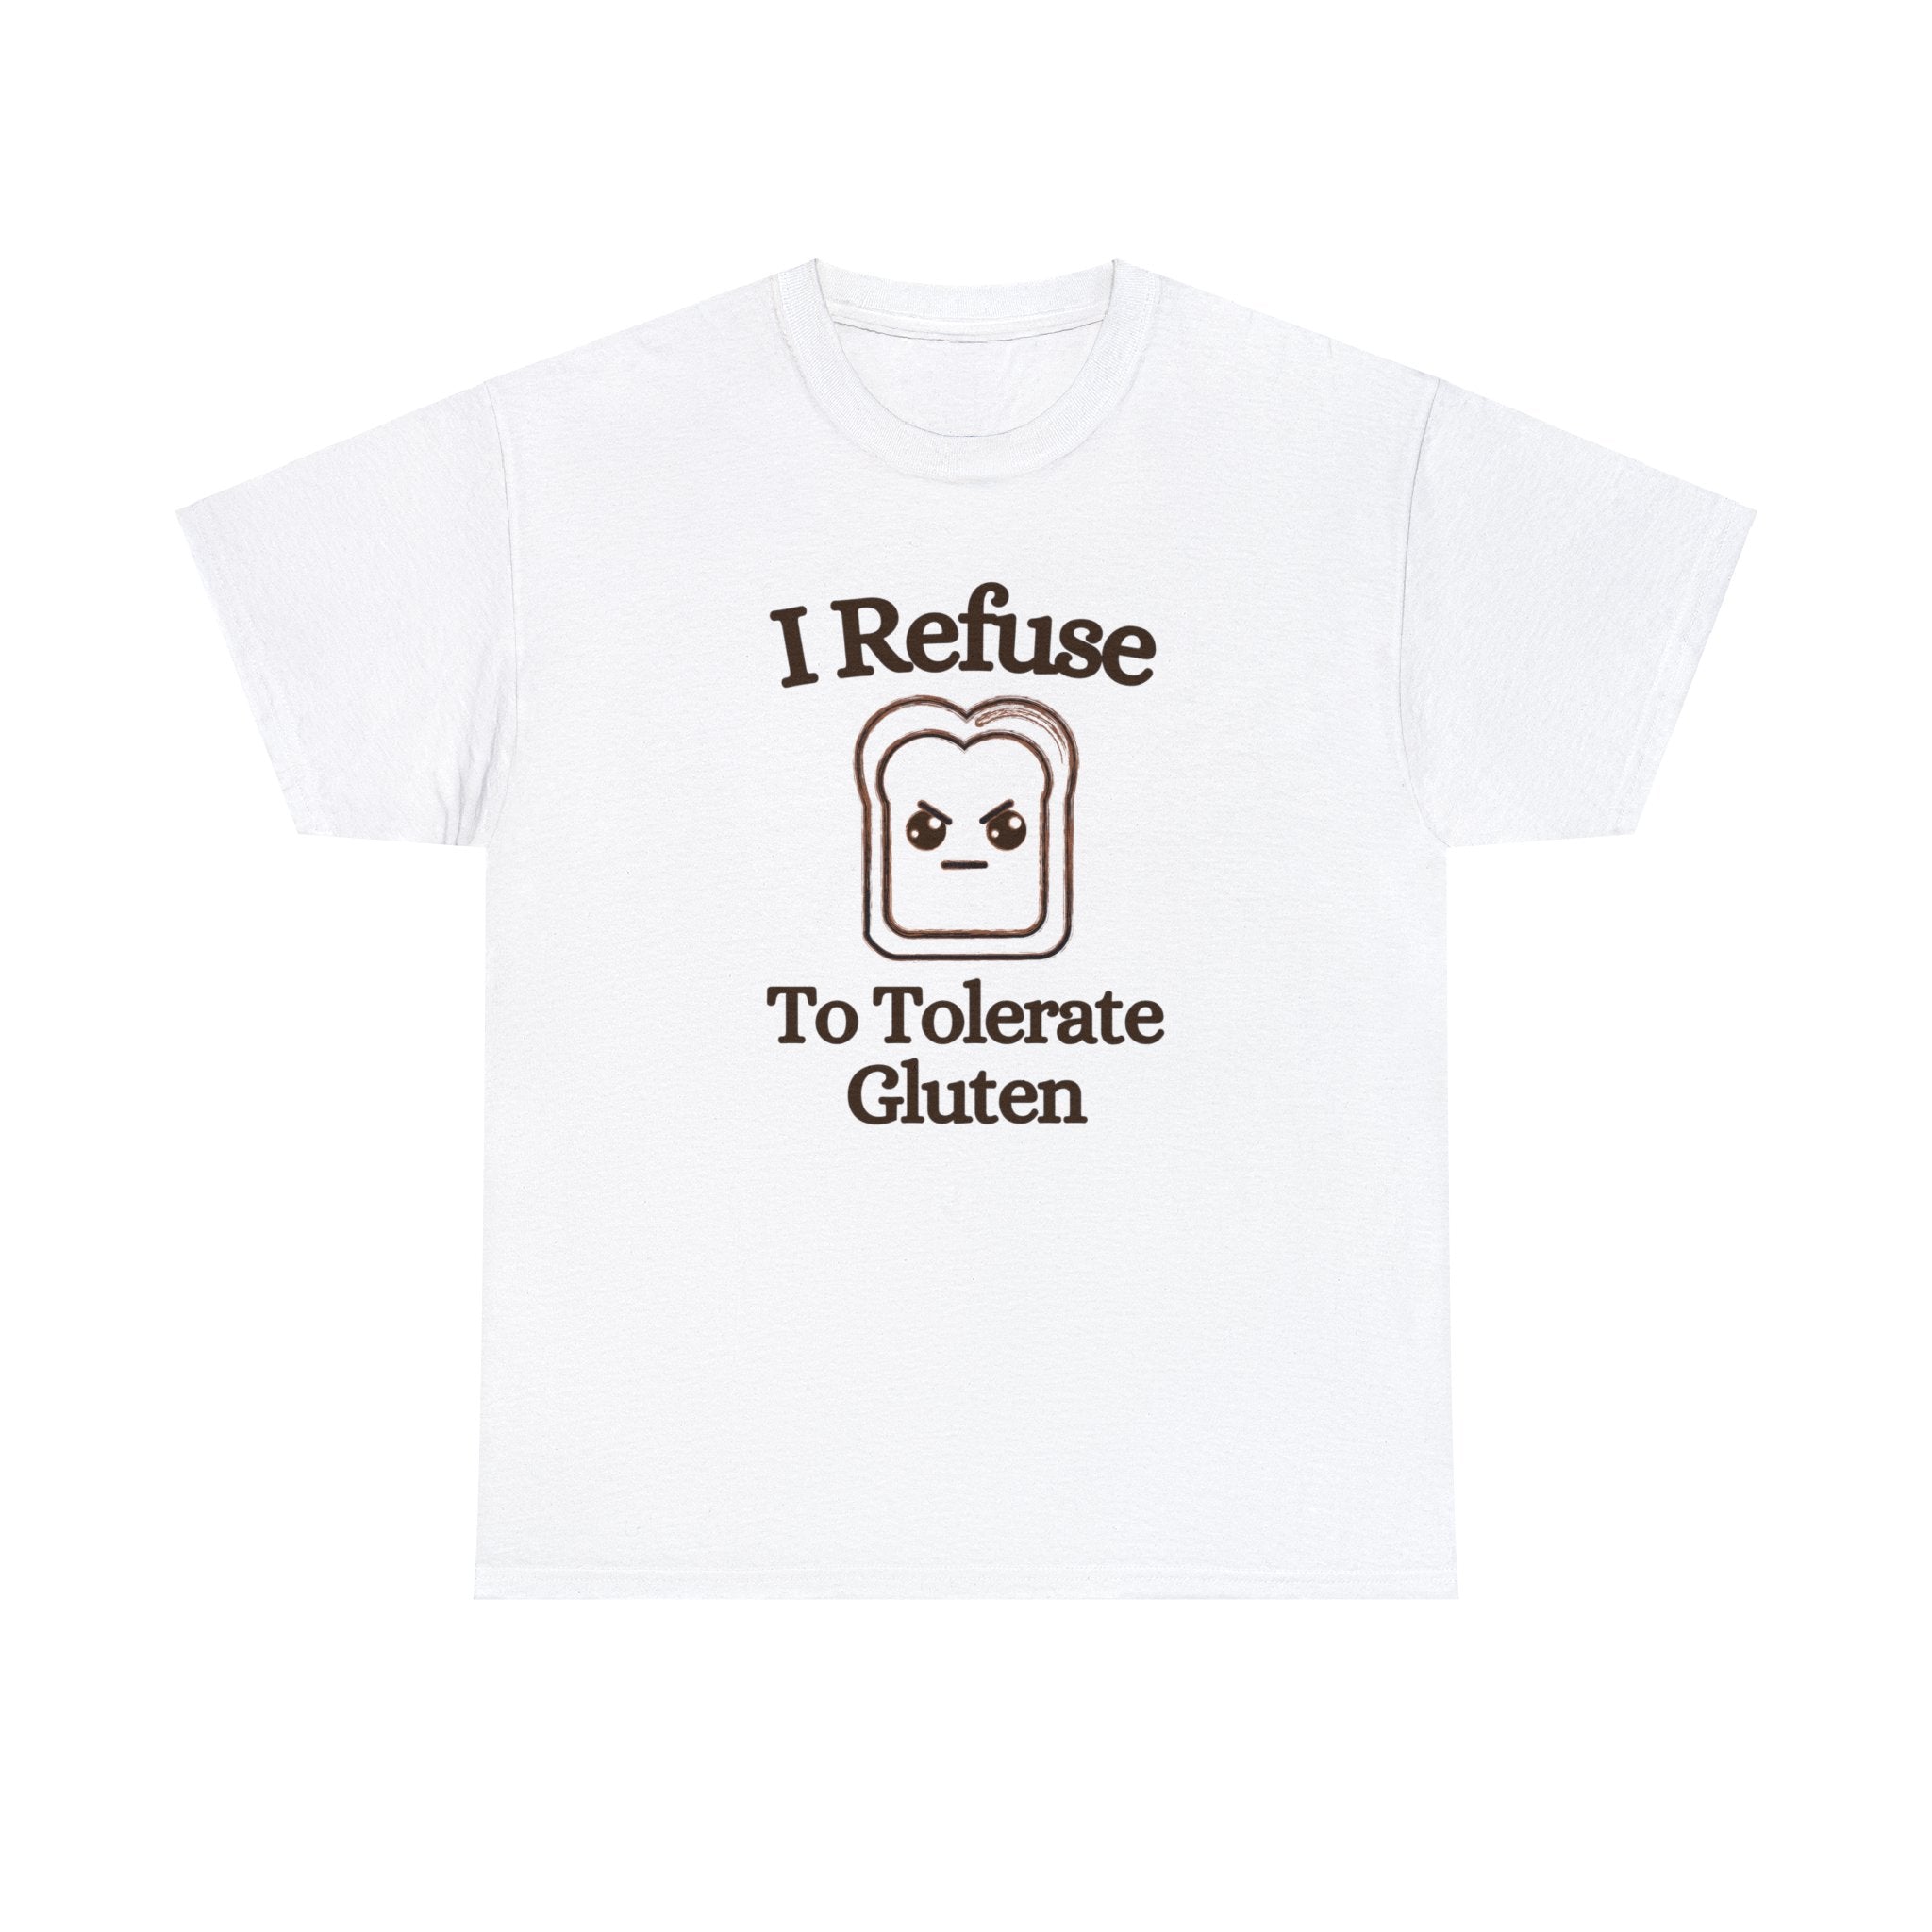 I Refuse to Tolerate Gluten | graphic tee | funny shirt | vintage shirt | sarcastic t-shirt retro cartoon tee